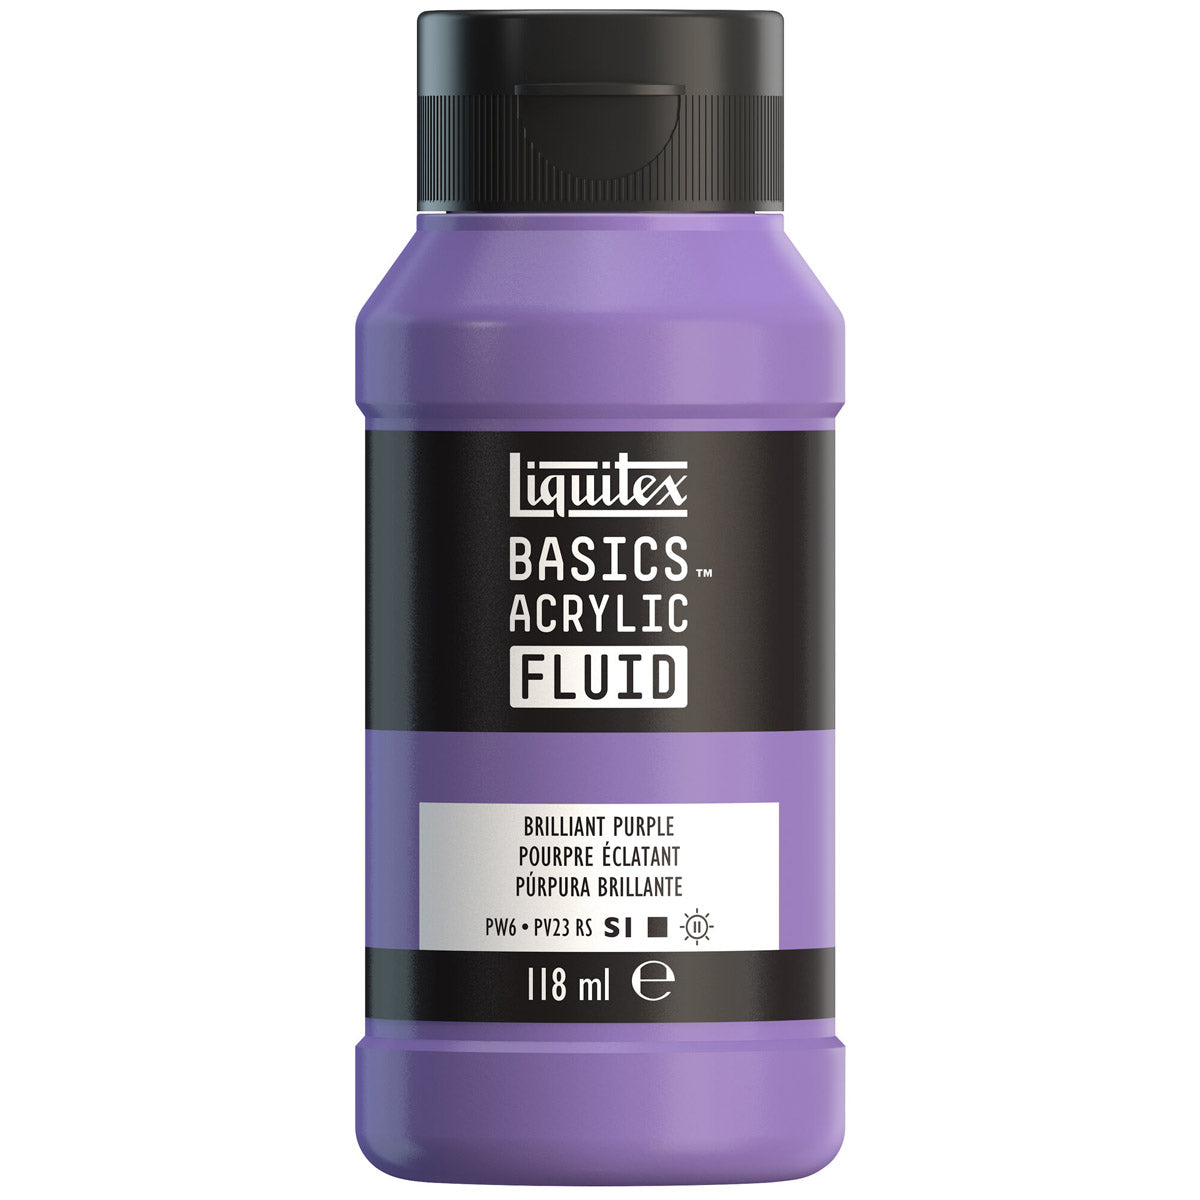 Liquitex Basics Fluid Acrylic 118ml - Brilliant Purple S1